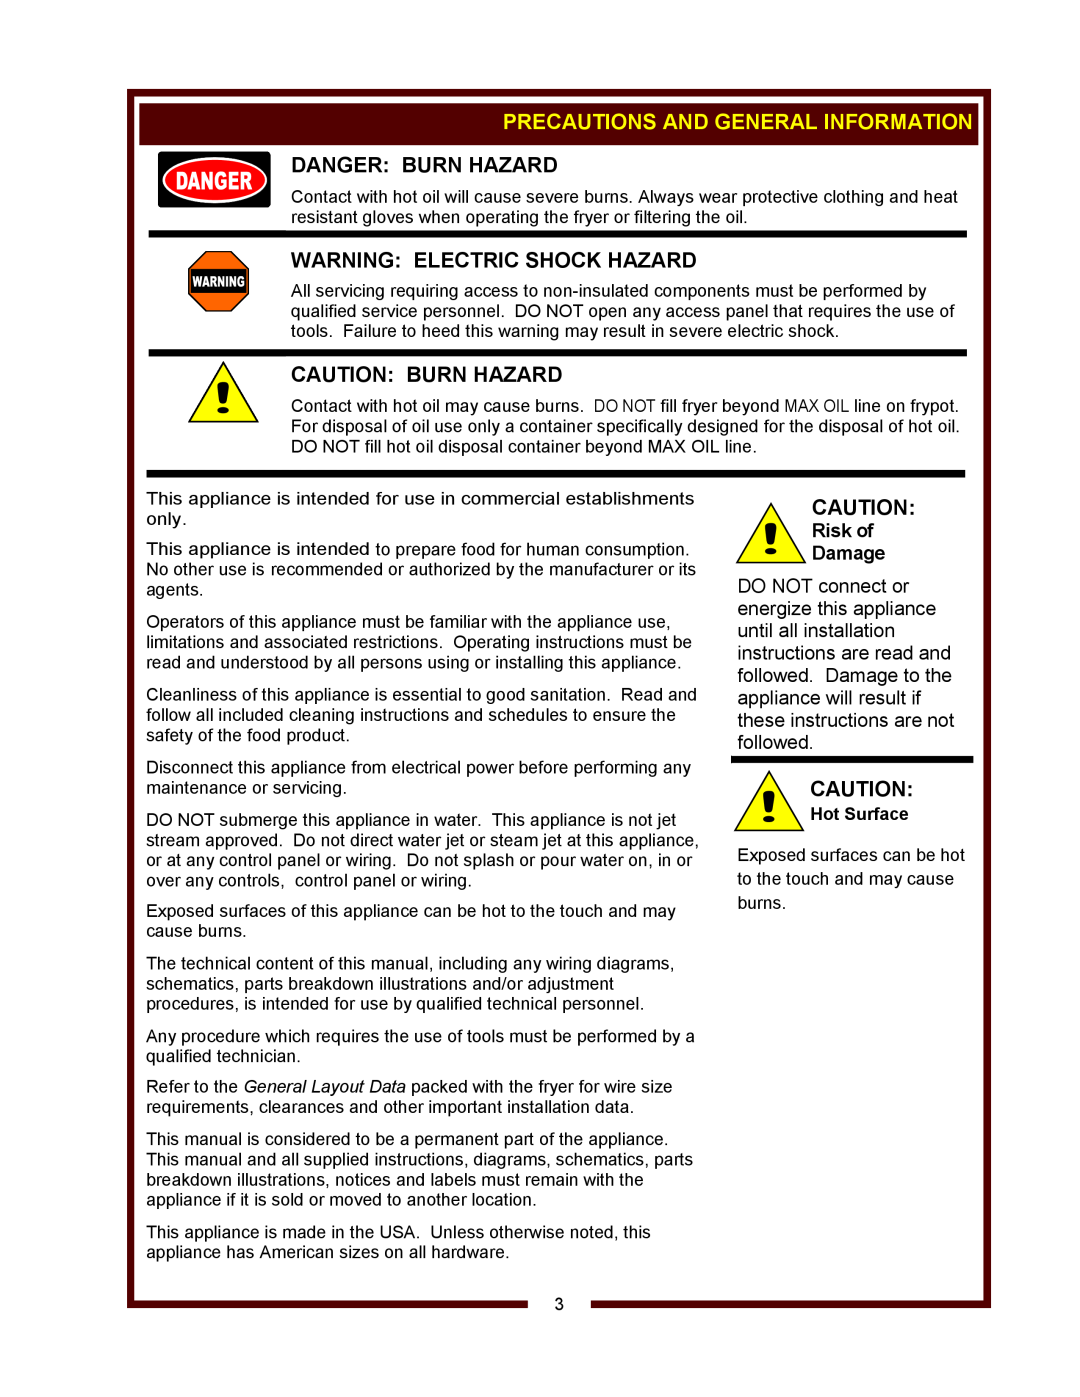 Wells F-101 Precautions And General Information, Danger Burn Hazard, Warning Electric Shock Hazard, Caution Burn Hazard 